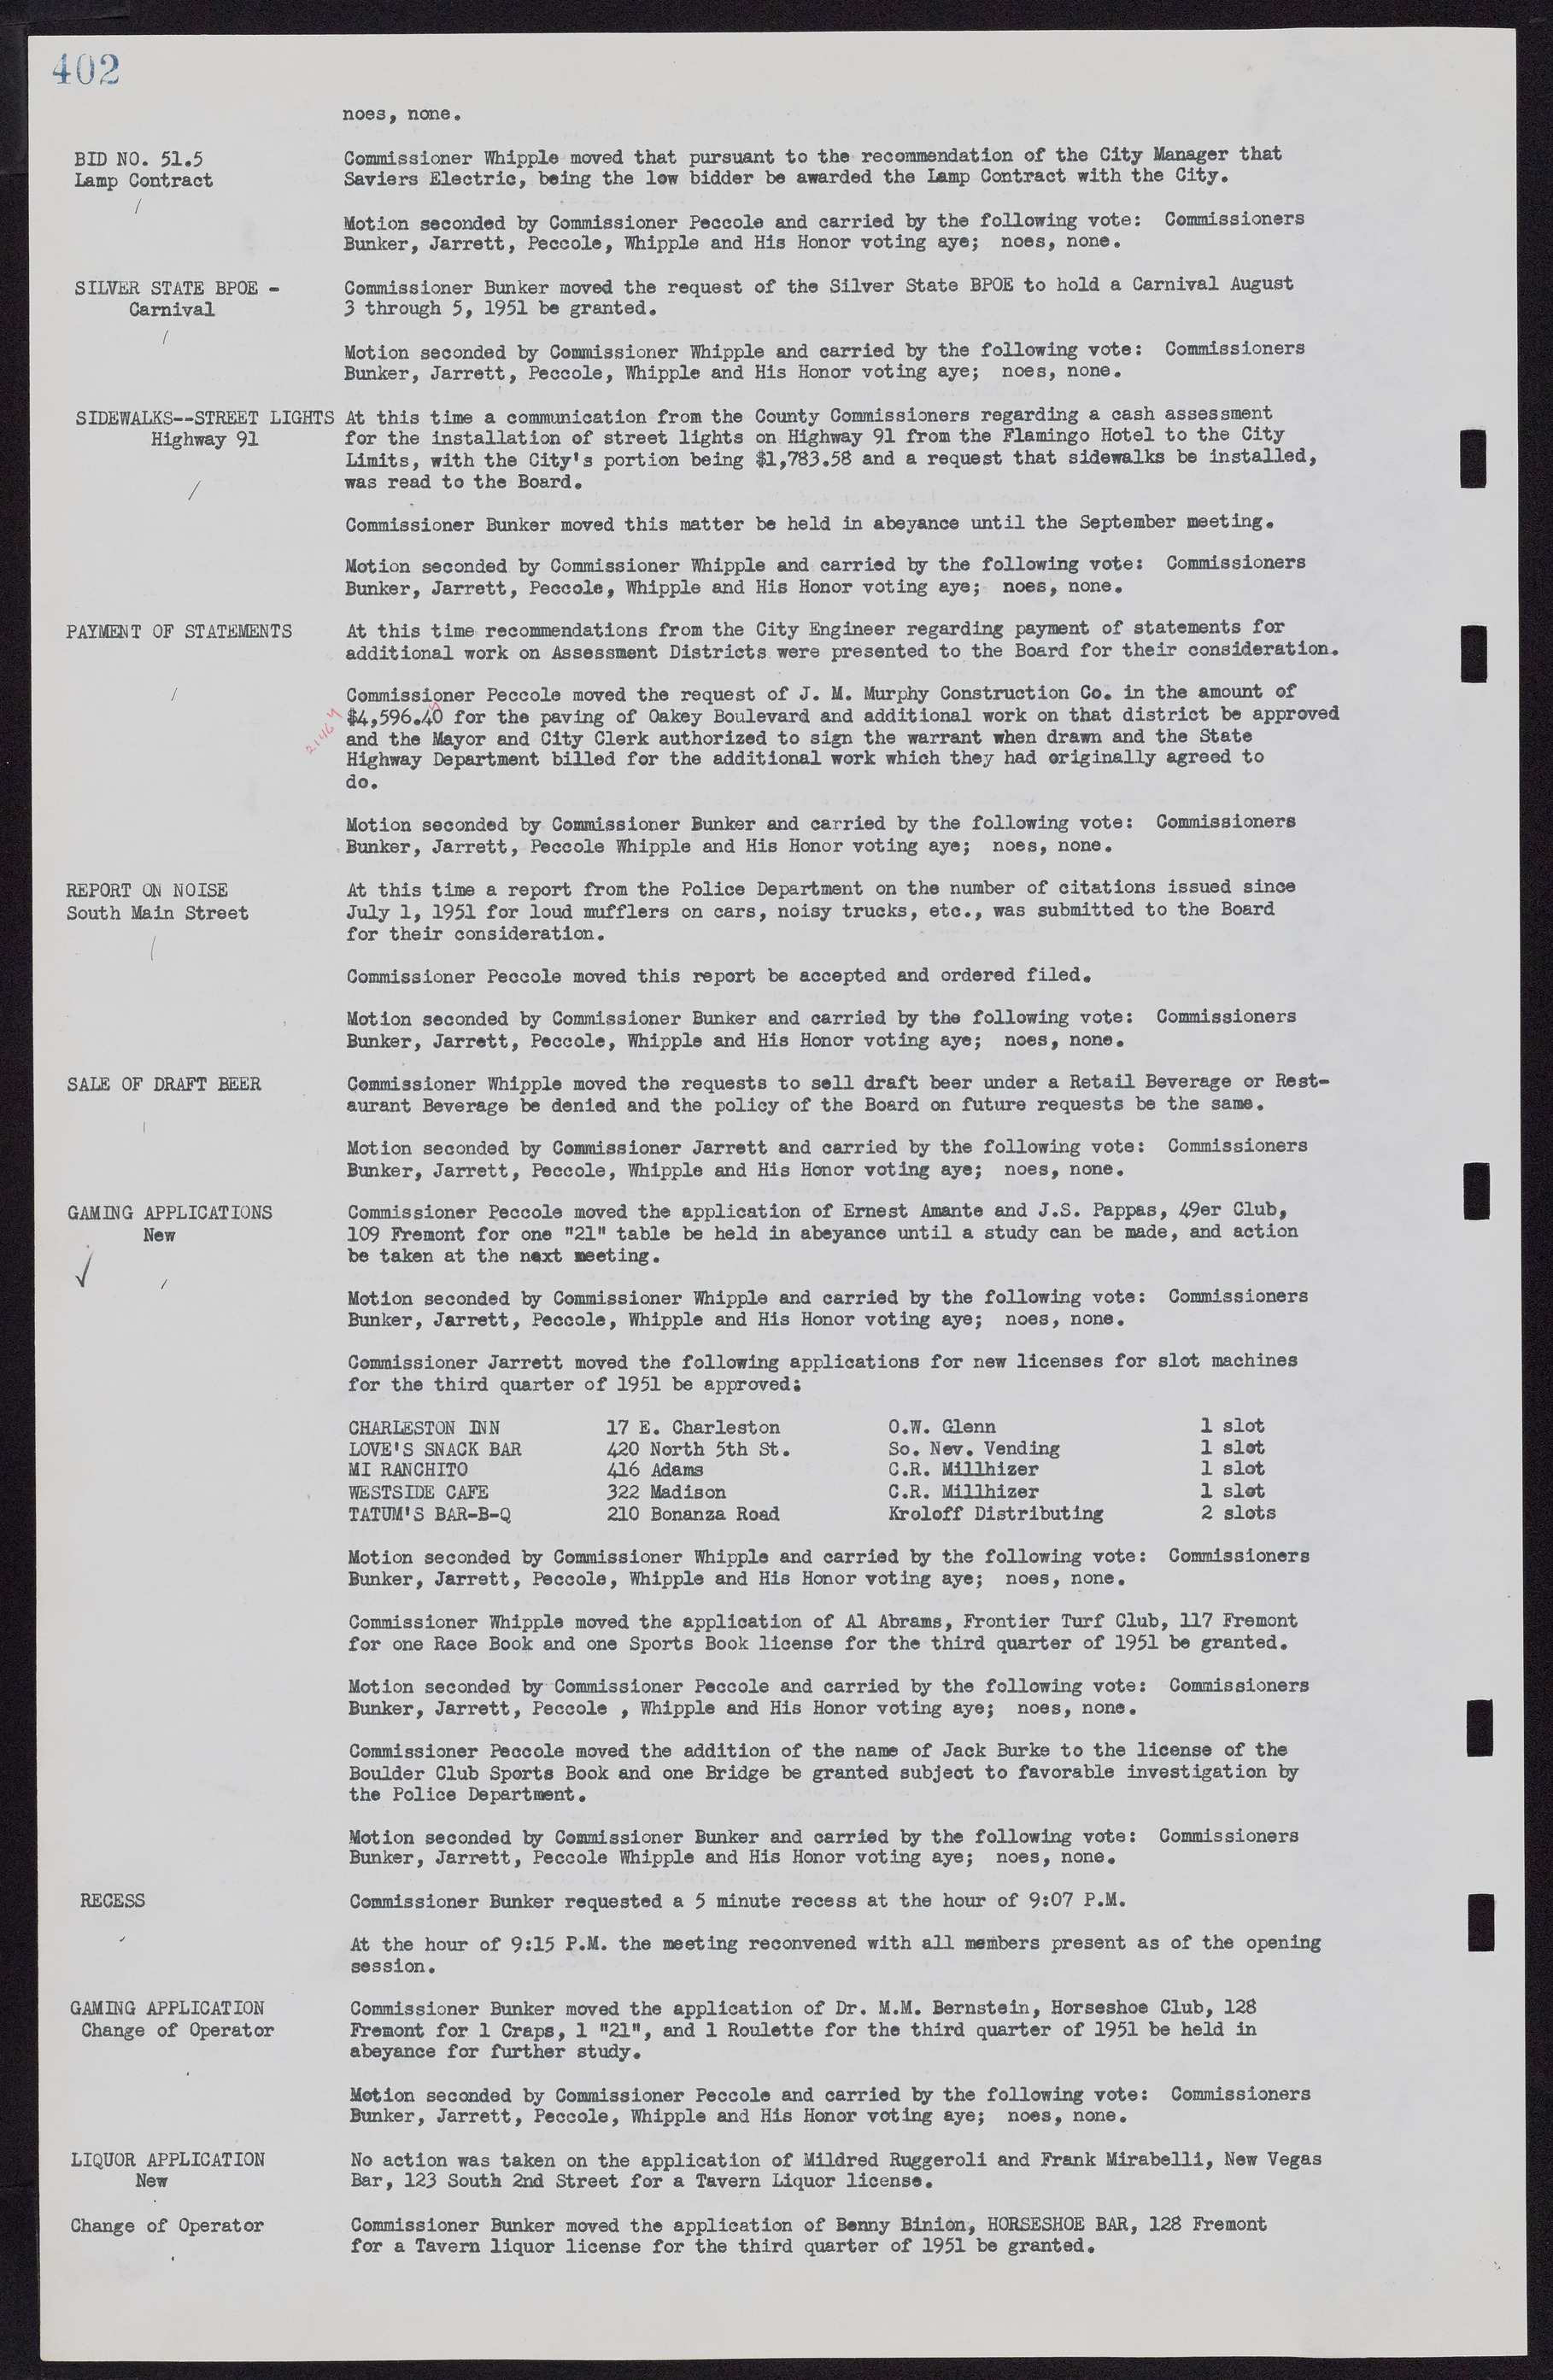 Las Vegas City Commission Minutes, November 7, 1949 to May 21, 1952, lvc000007-418